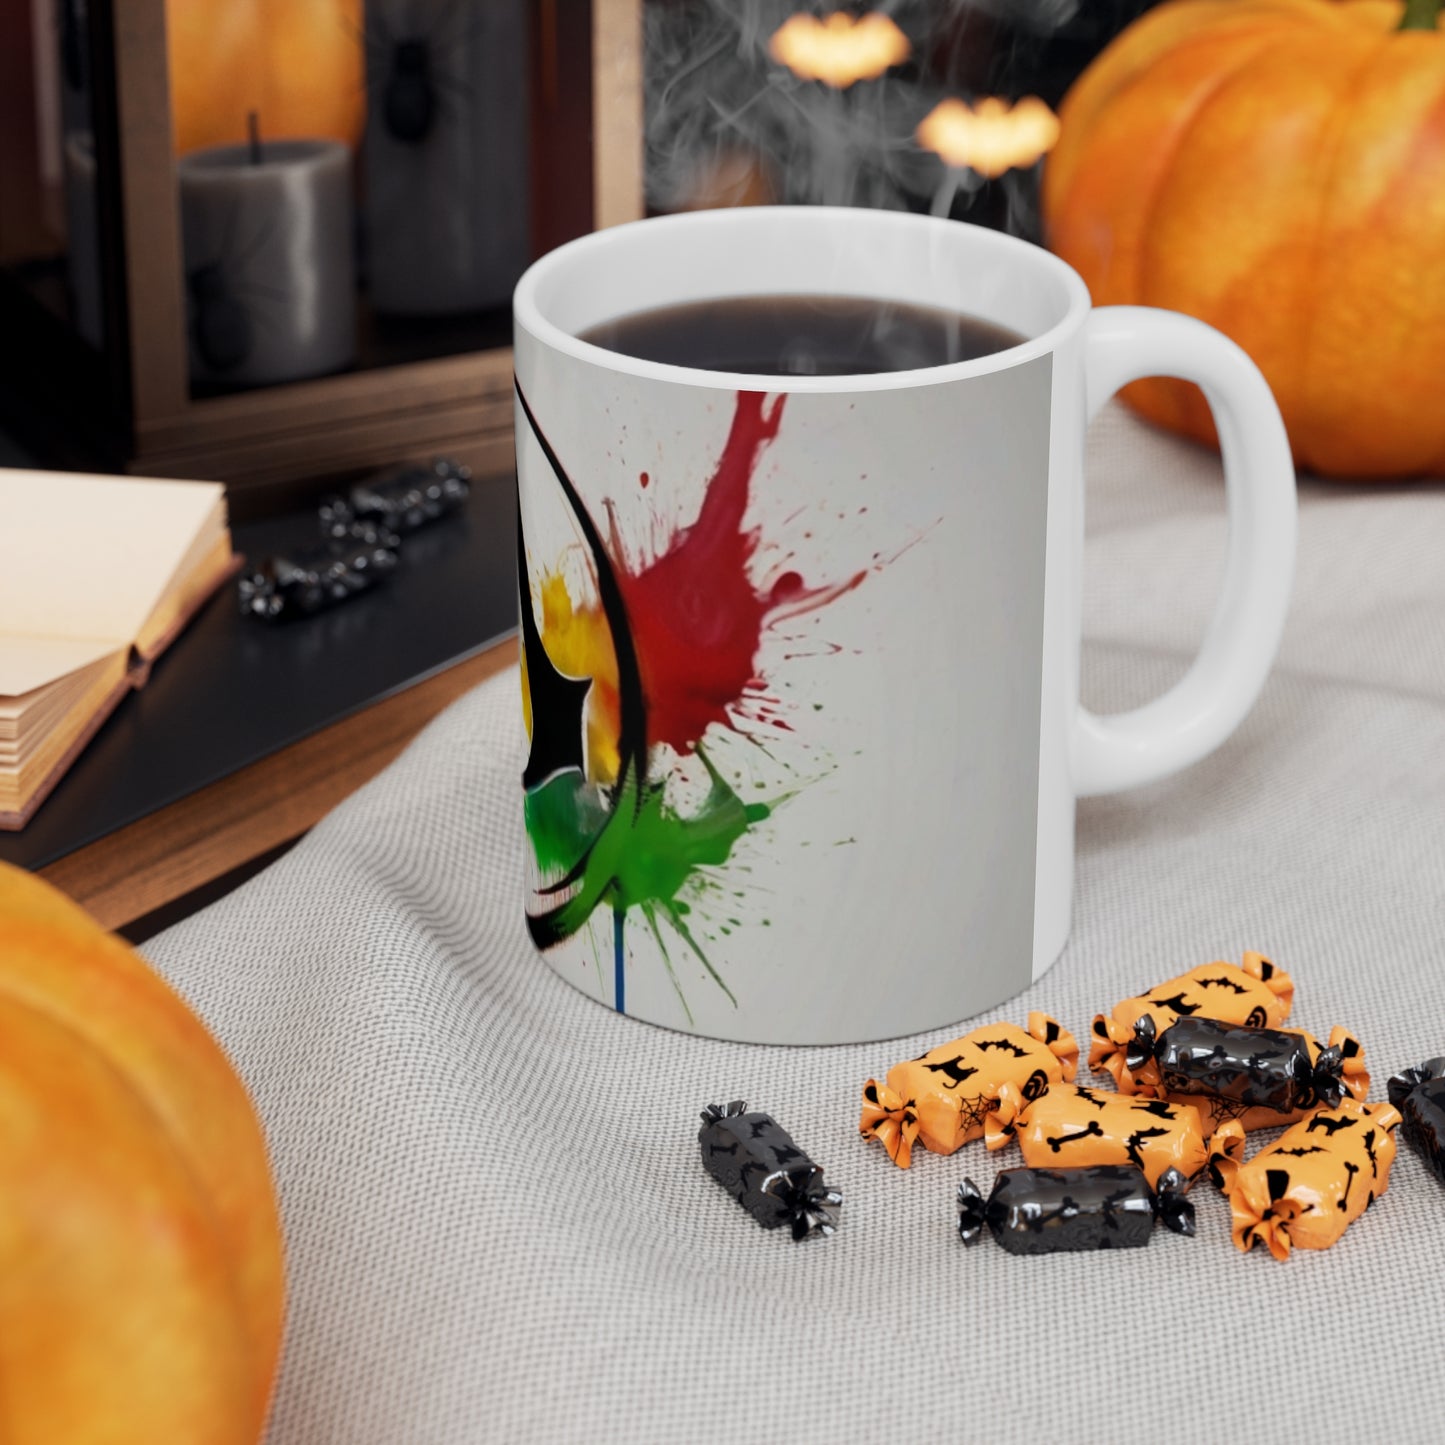 Assassin's Creed Logo Paint Splatter - Ceramic Coffee Mug 11oz